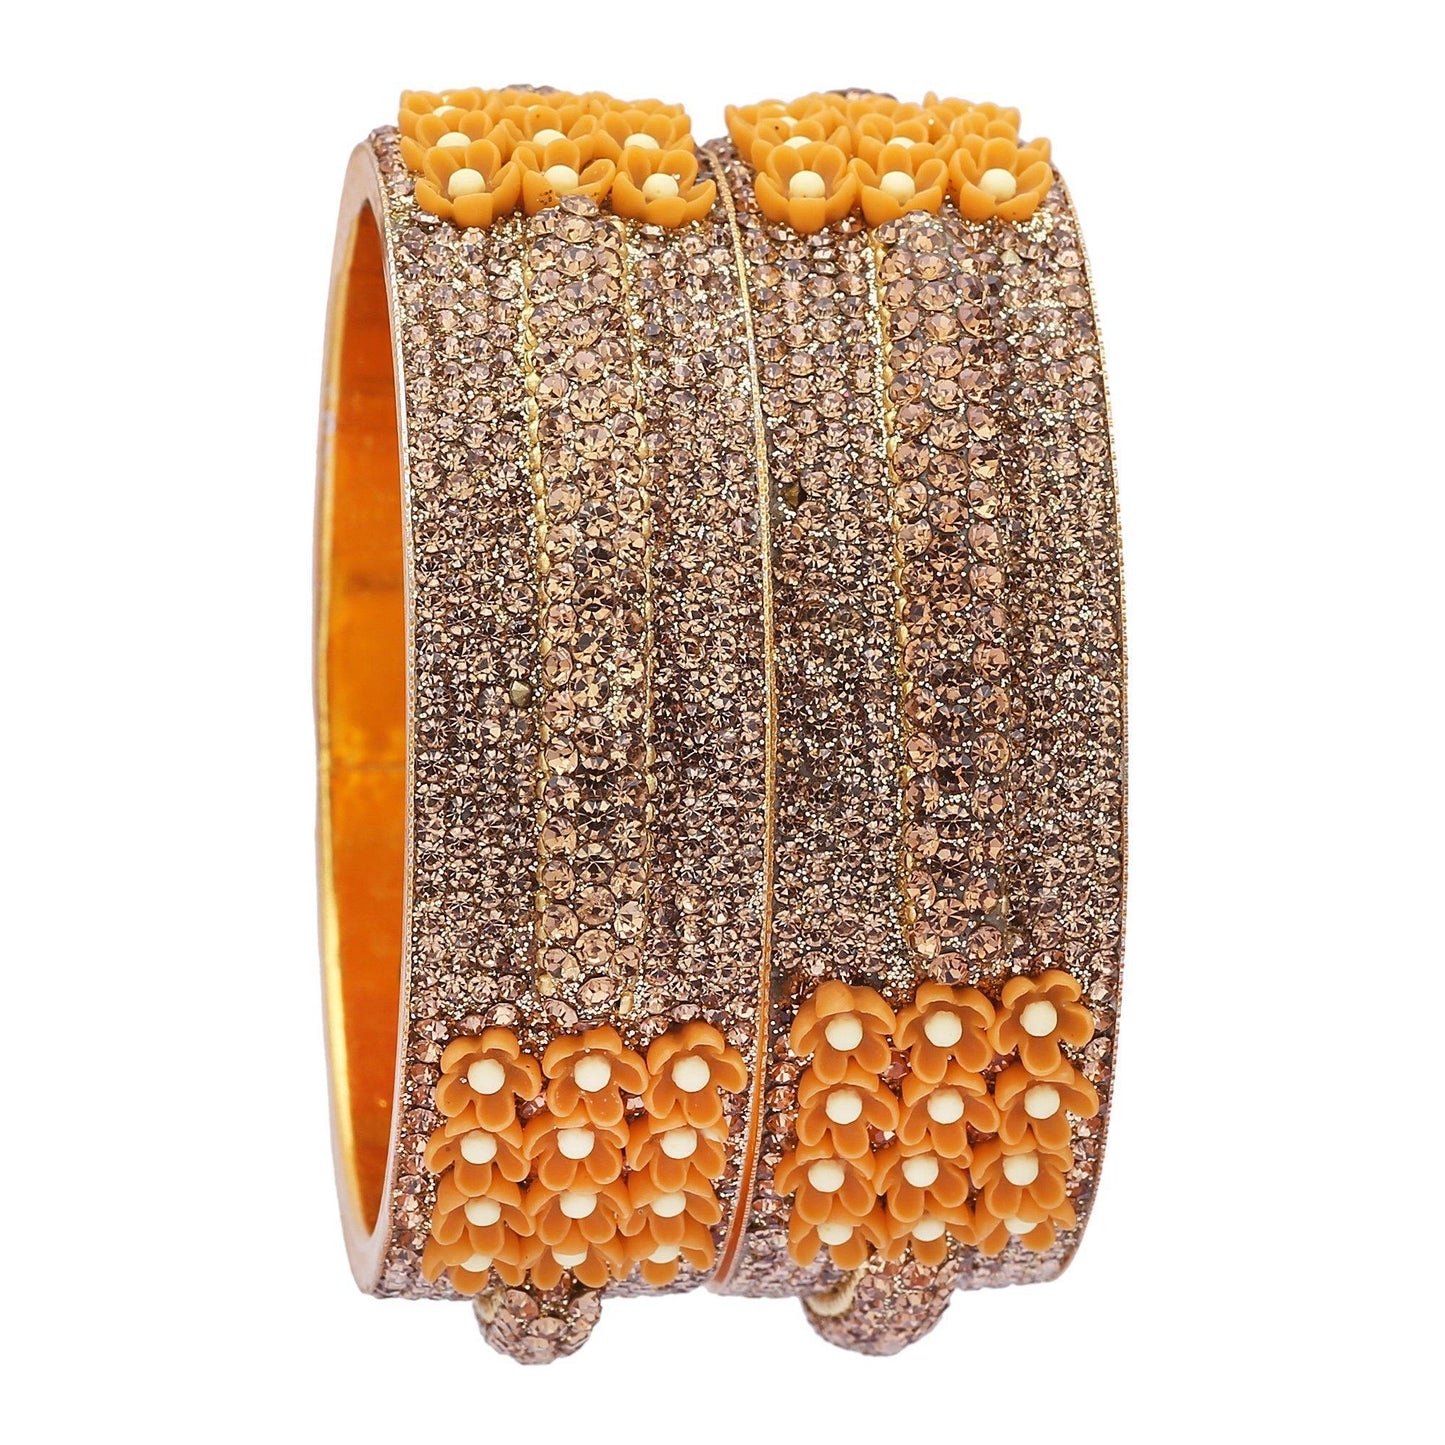 sukriti beautiful partywear flower brass kada gold bangles for women – set of 2